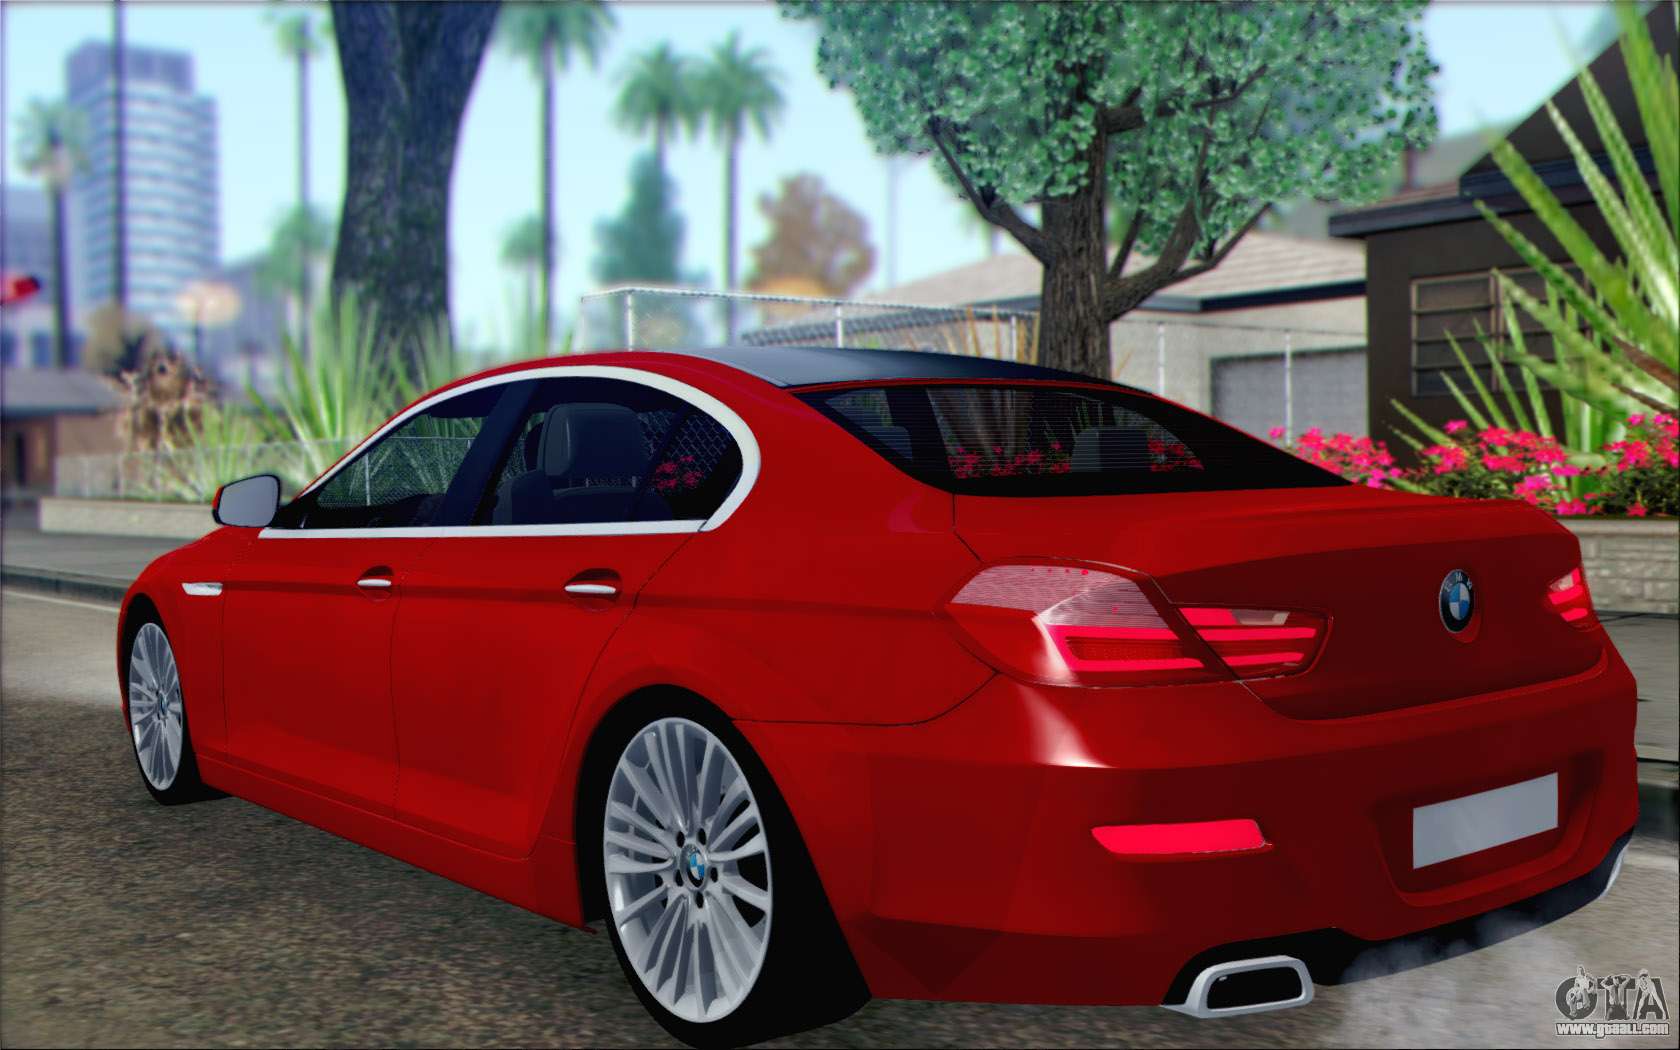 BMW 6 Gran Coupe v1.0 for GTA San Andreas